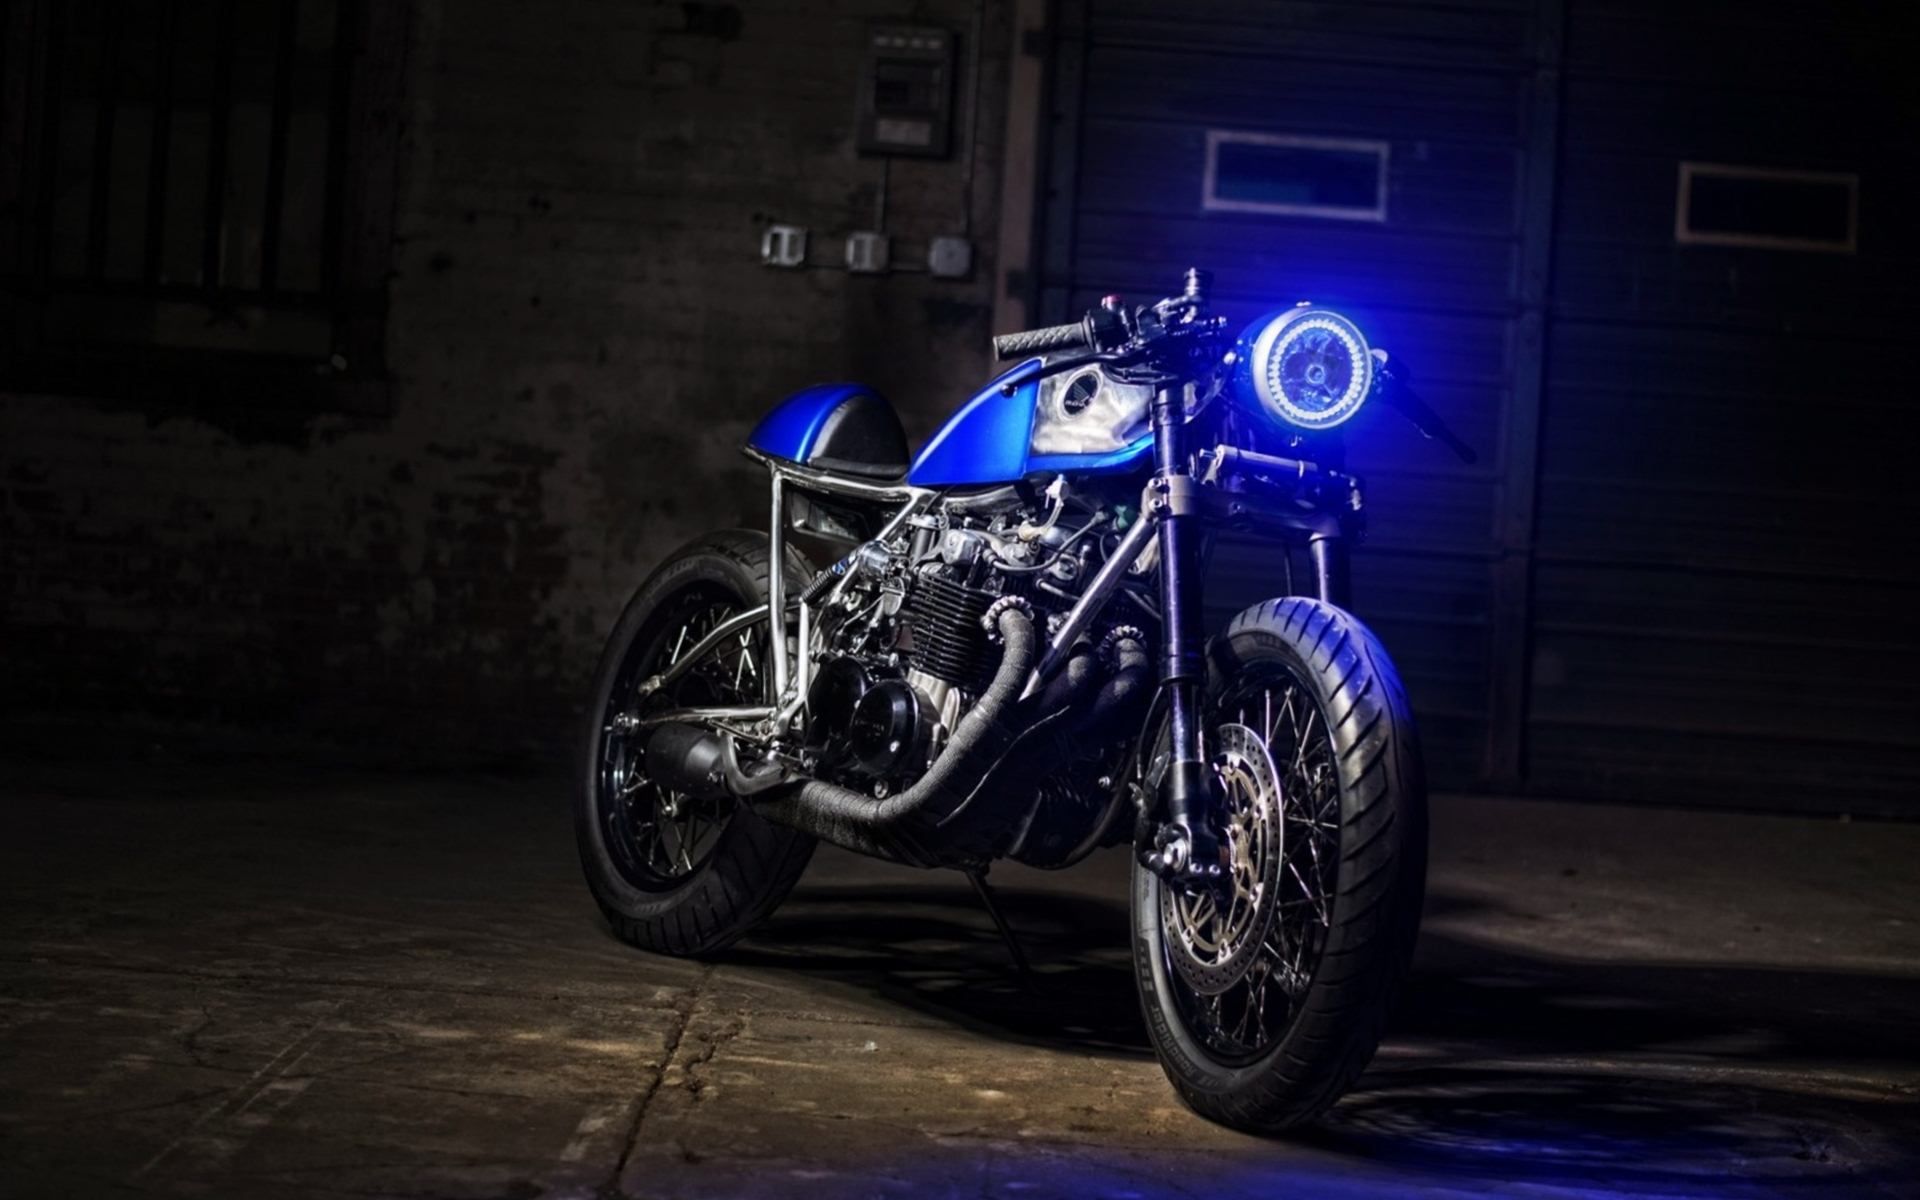 Stunning Headlights Wallpaper. Motorcycle wallpaper, Blue motorcycle, Classic motorcycles